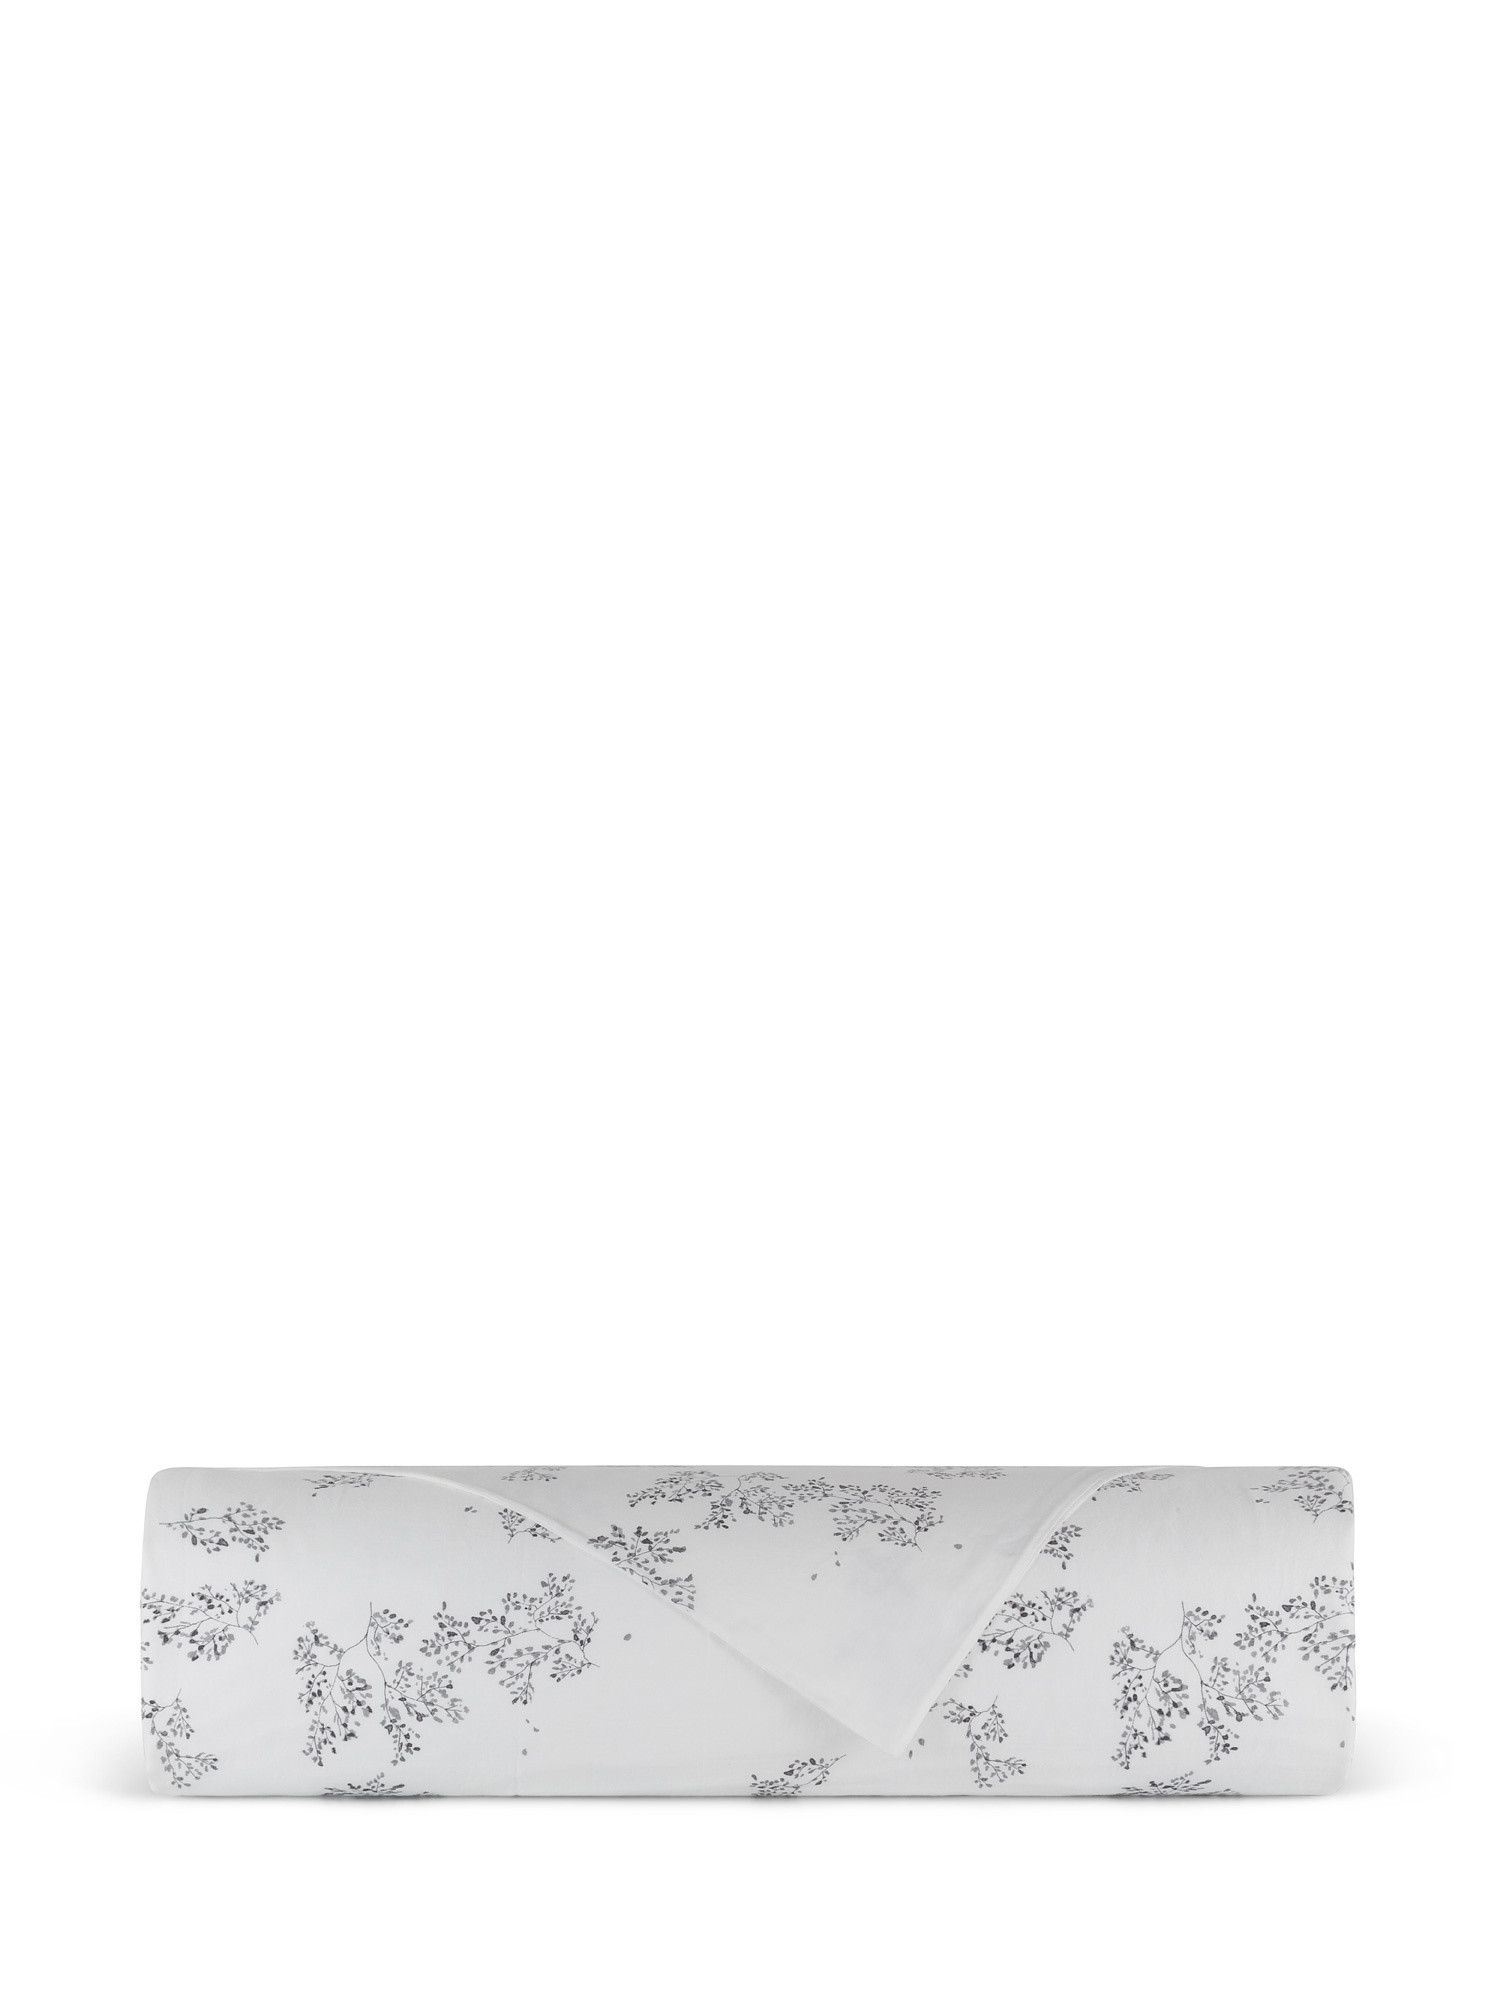 Portofino cotton satin duvet cover with ramage motif, White, large image number 2